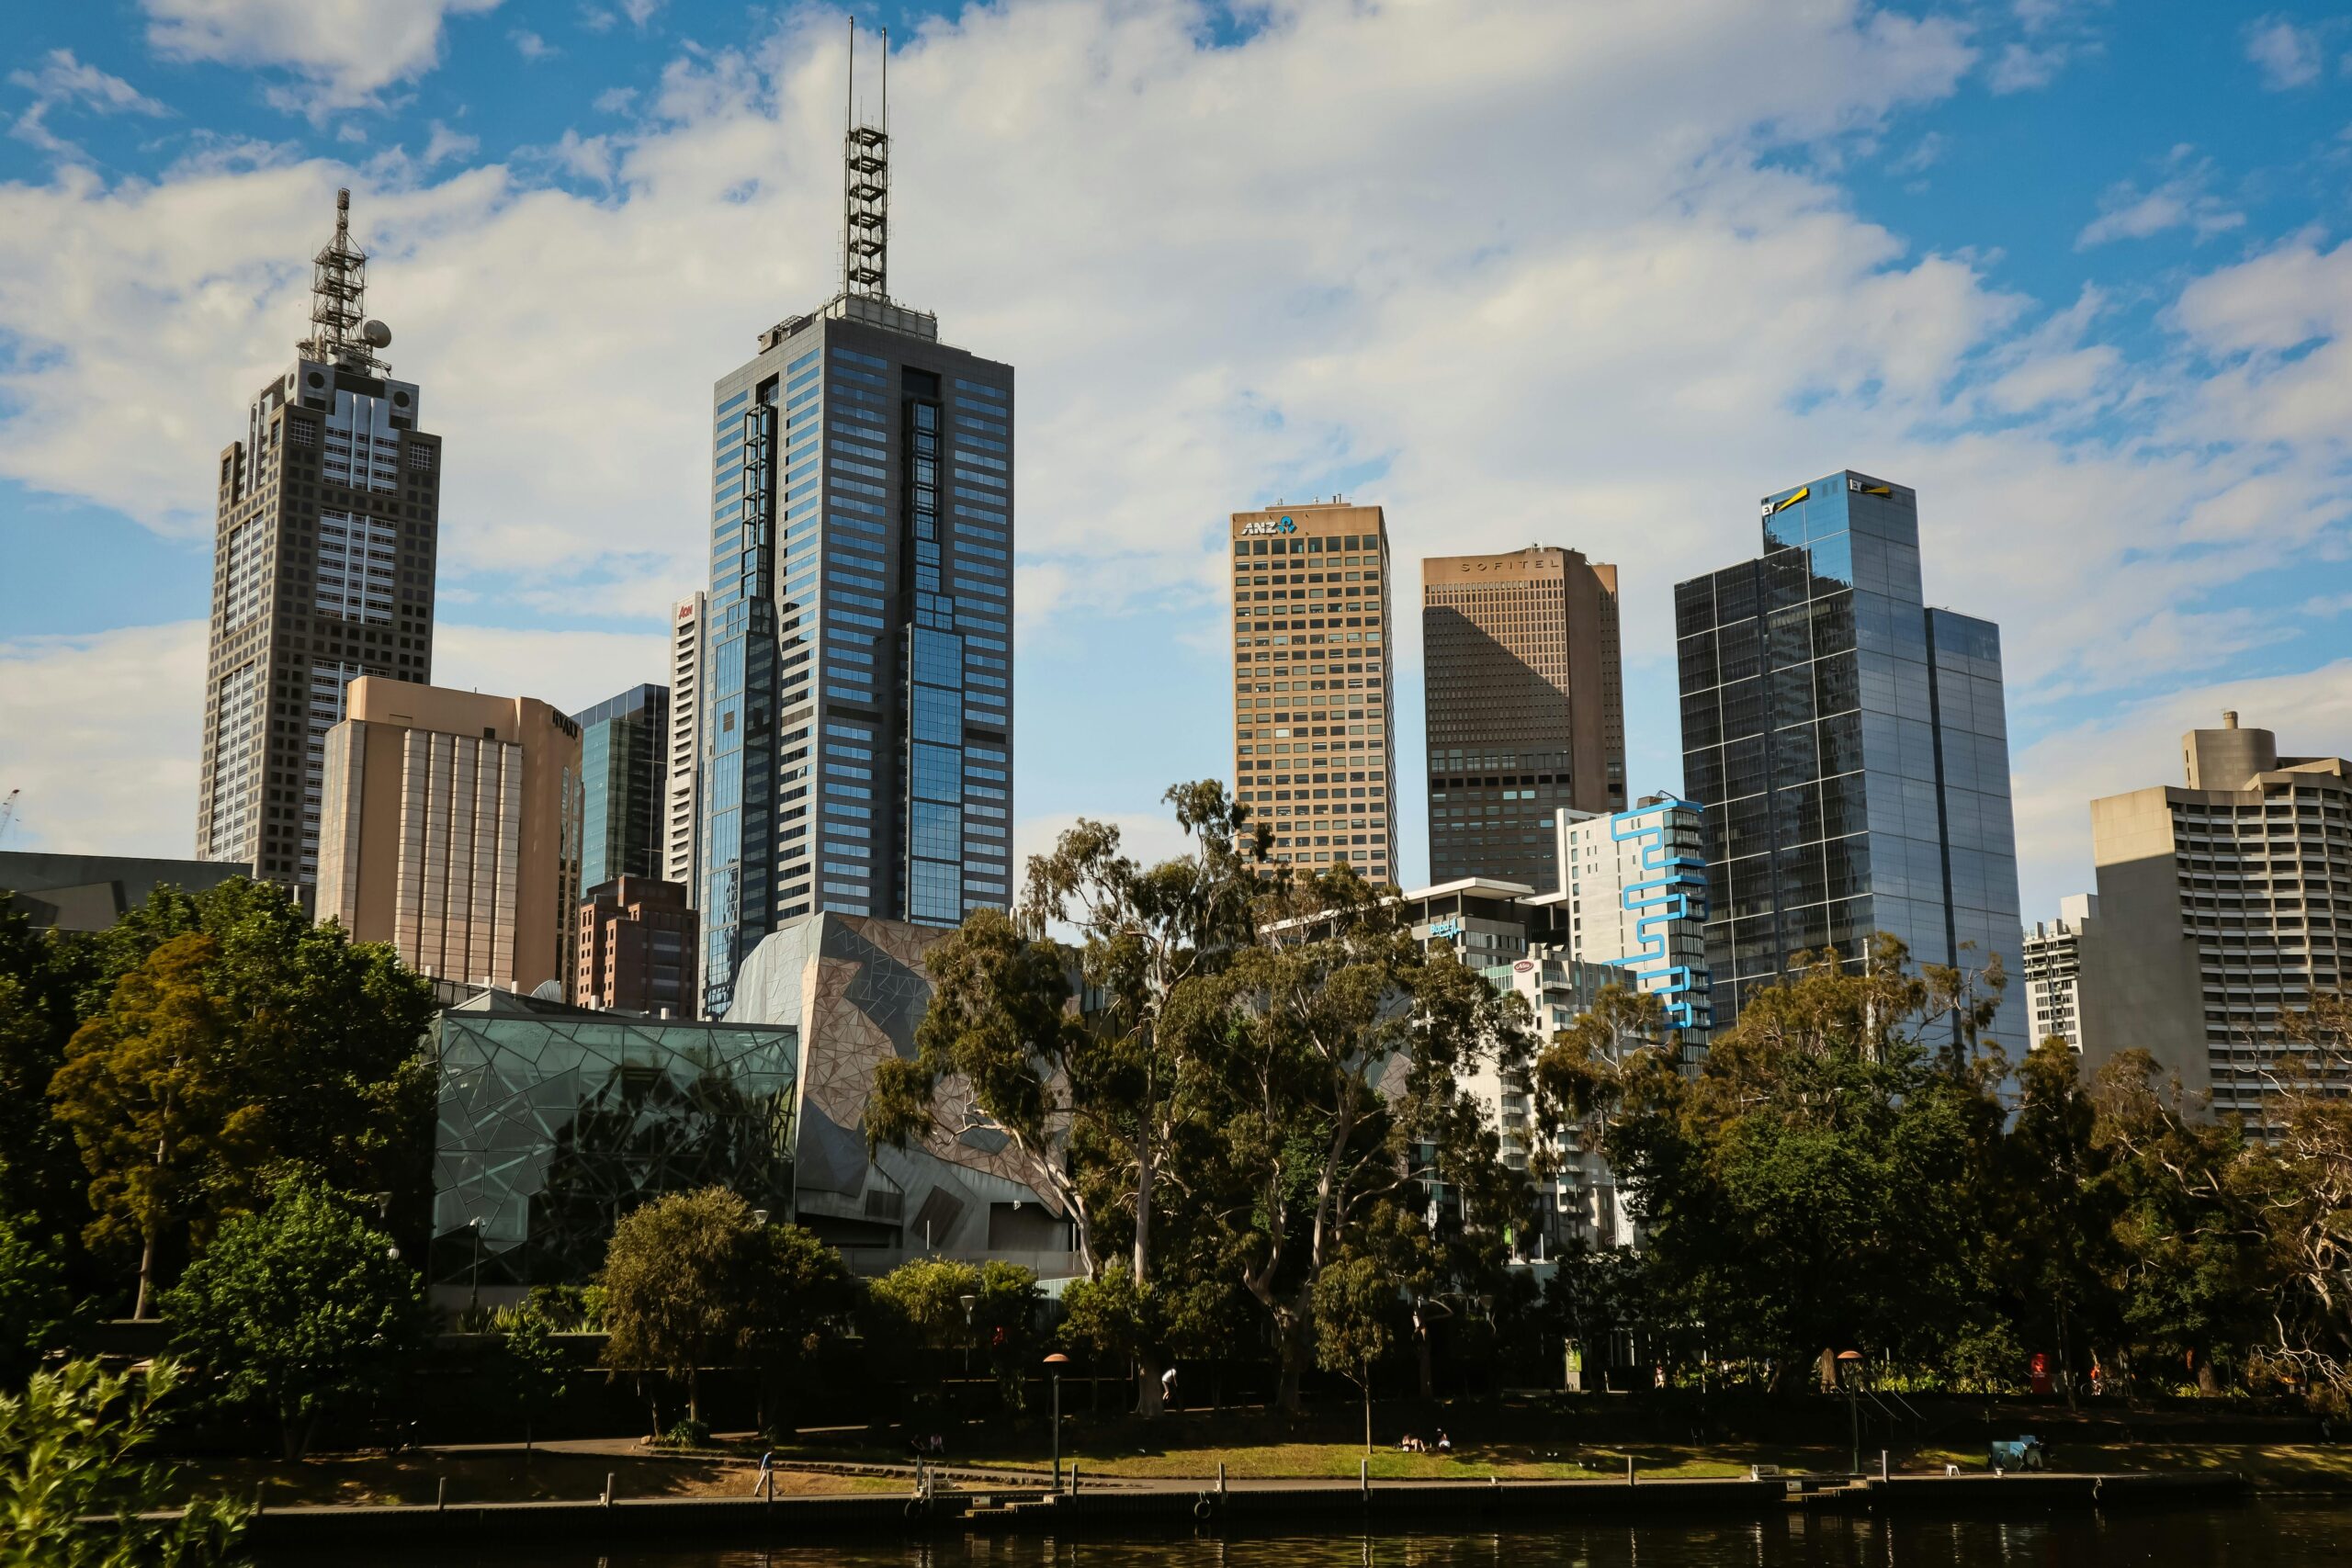 Melbourne's Countermeasures Against Climate-Driven Water Damage